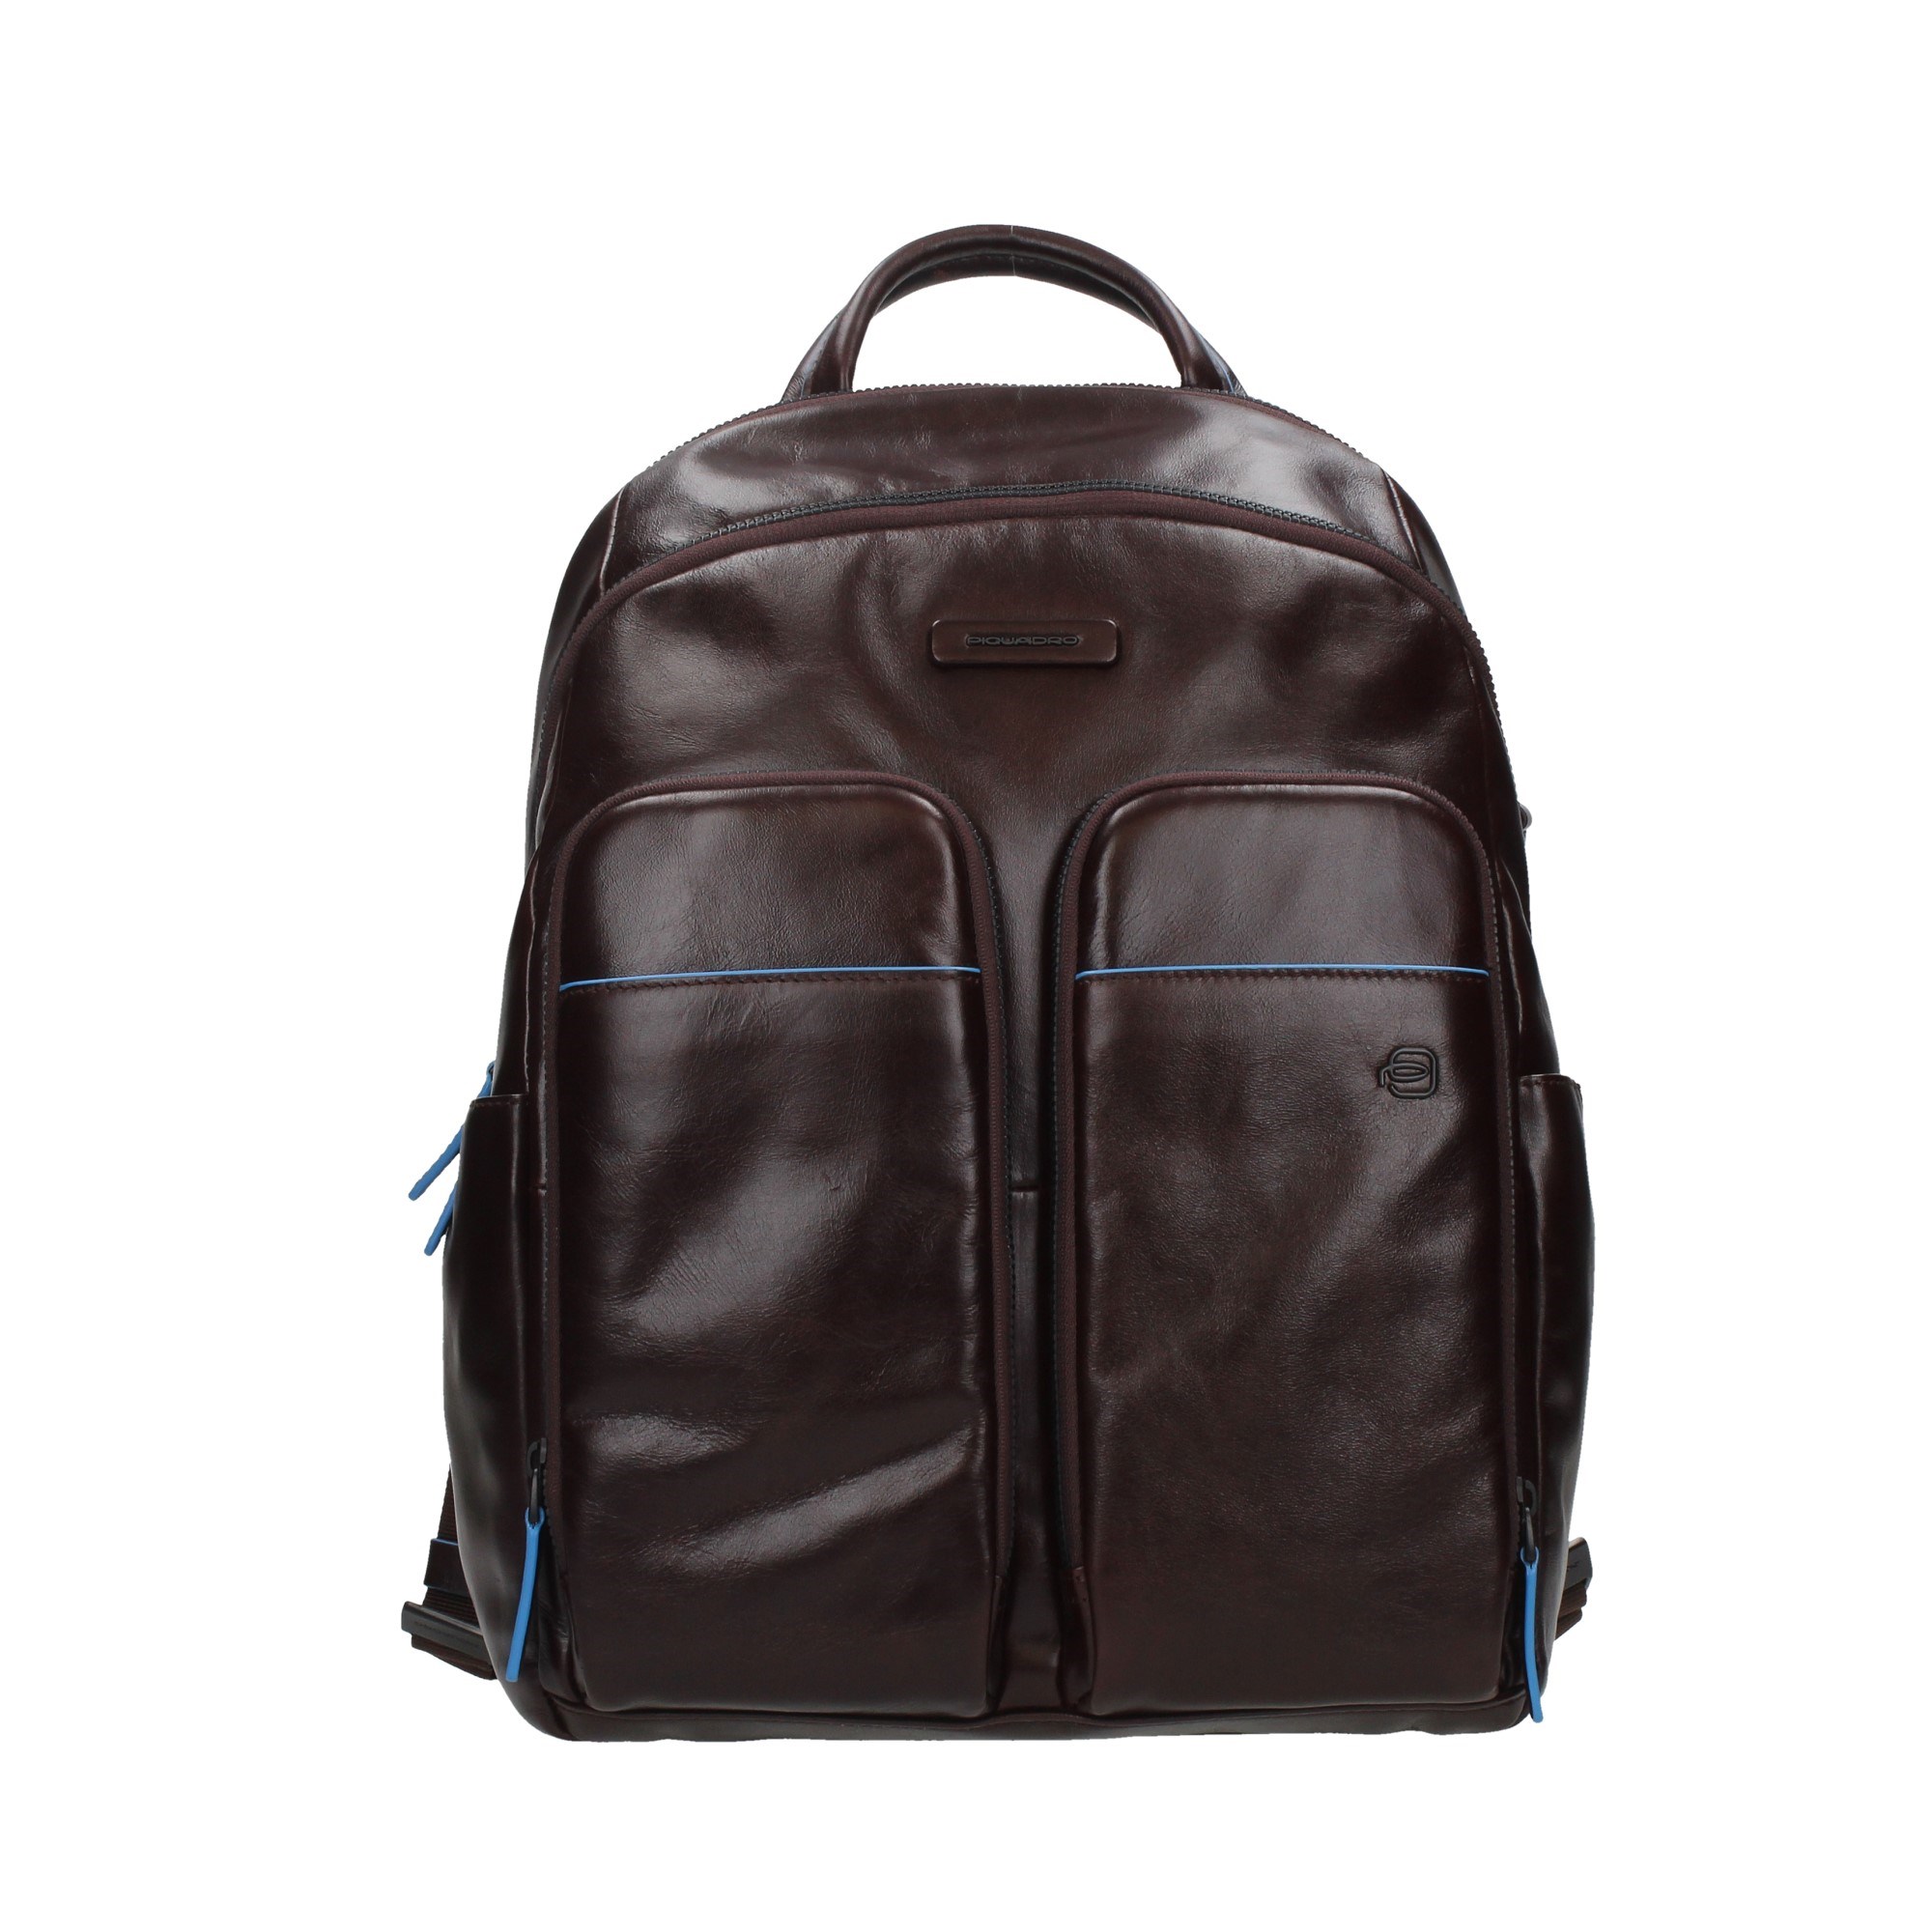 Piquadro. Accessories Man Backpack CA5574B2V/MO